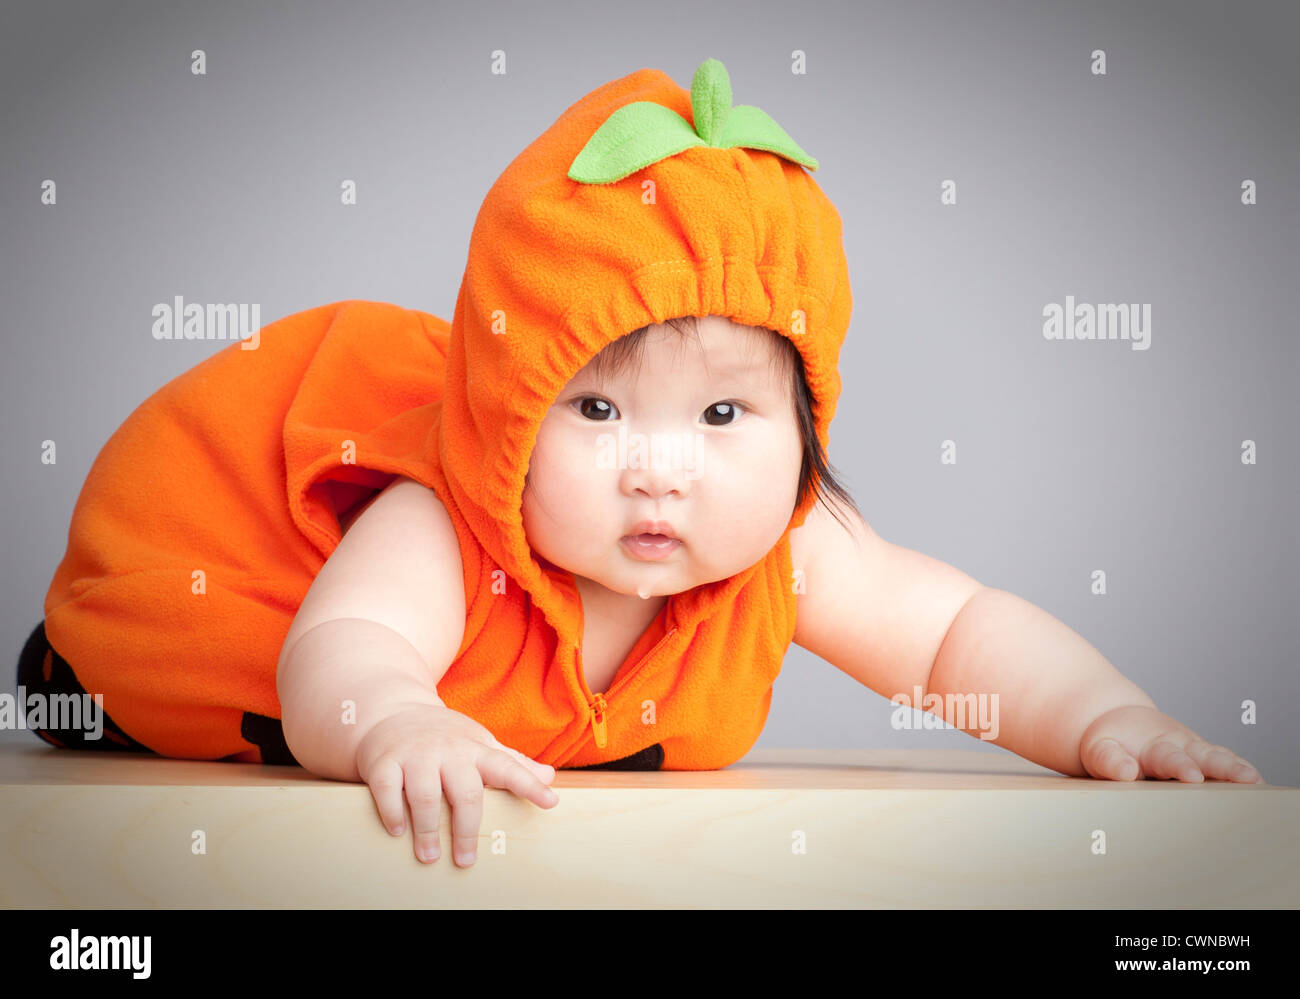 orange frock for baby girl